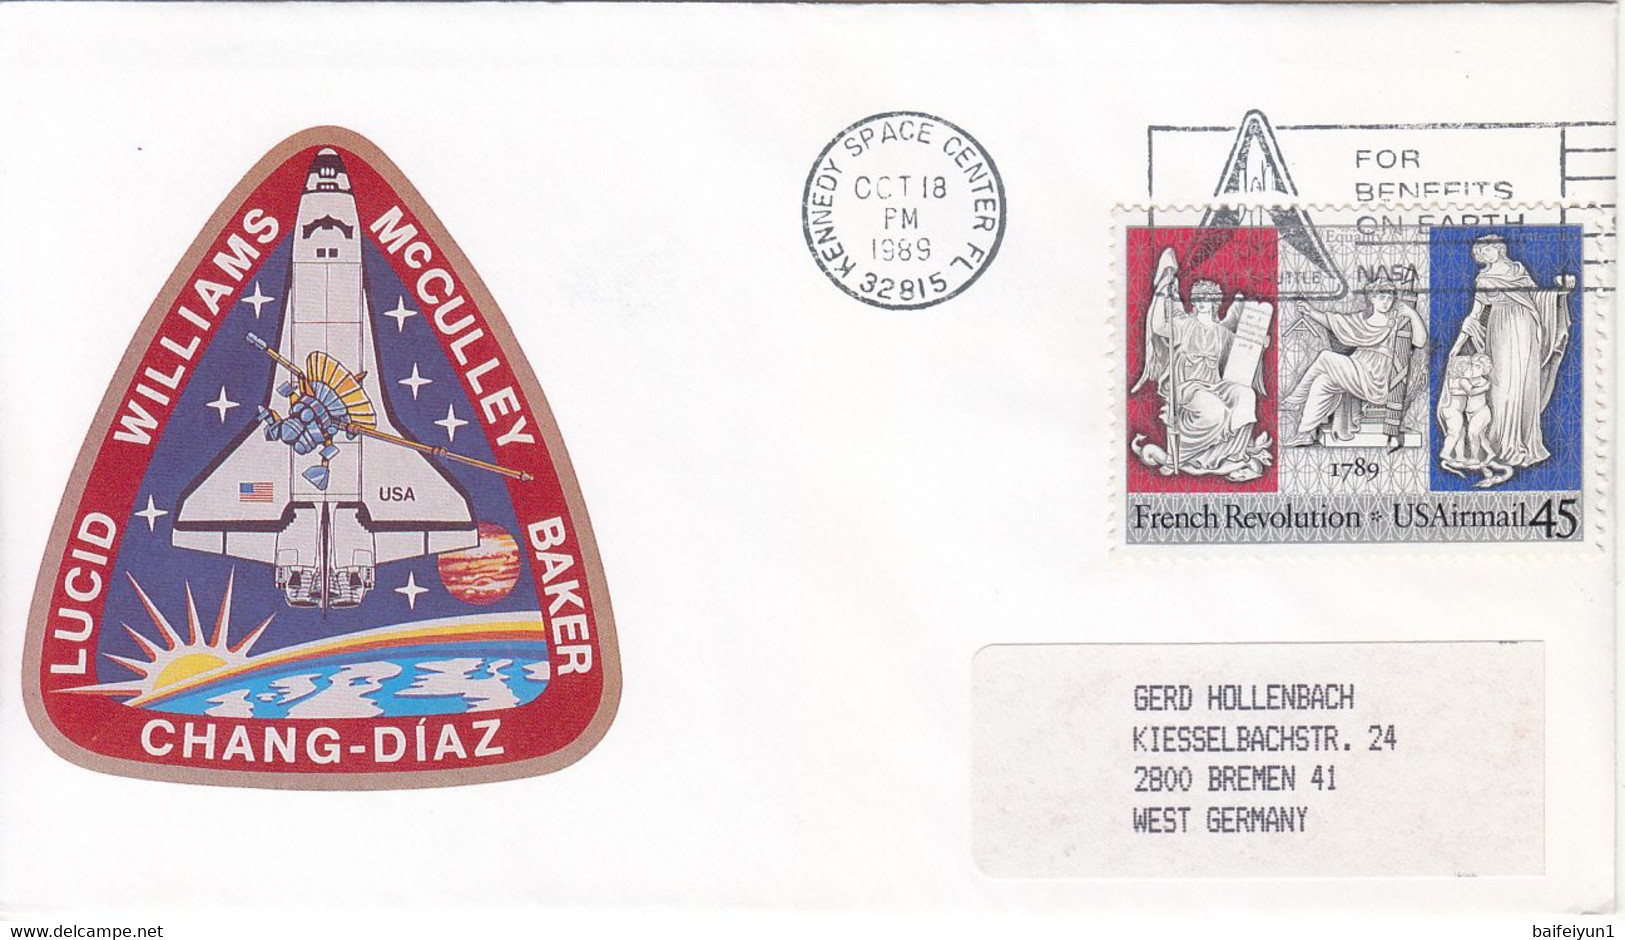 1989 USA Space Shuttle  Atlantis STS-34 Commemorative Cover - América Del Norte